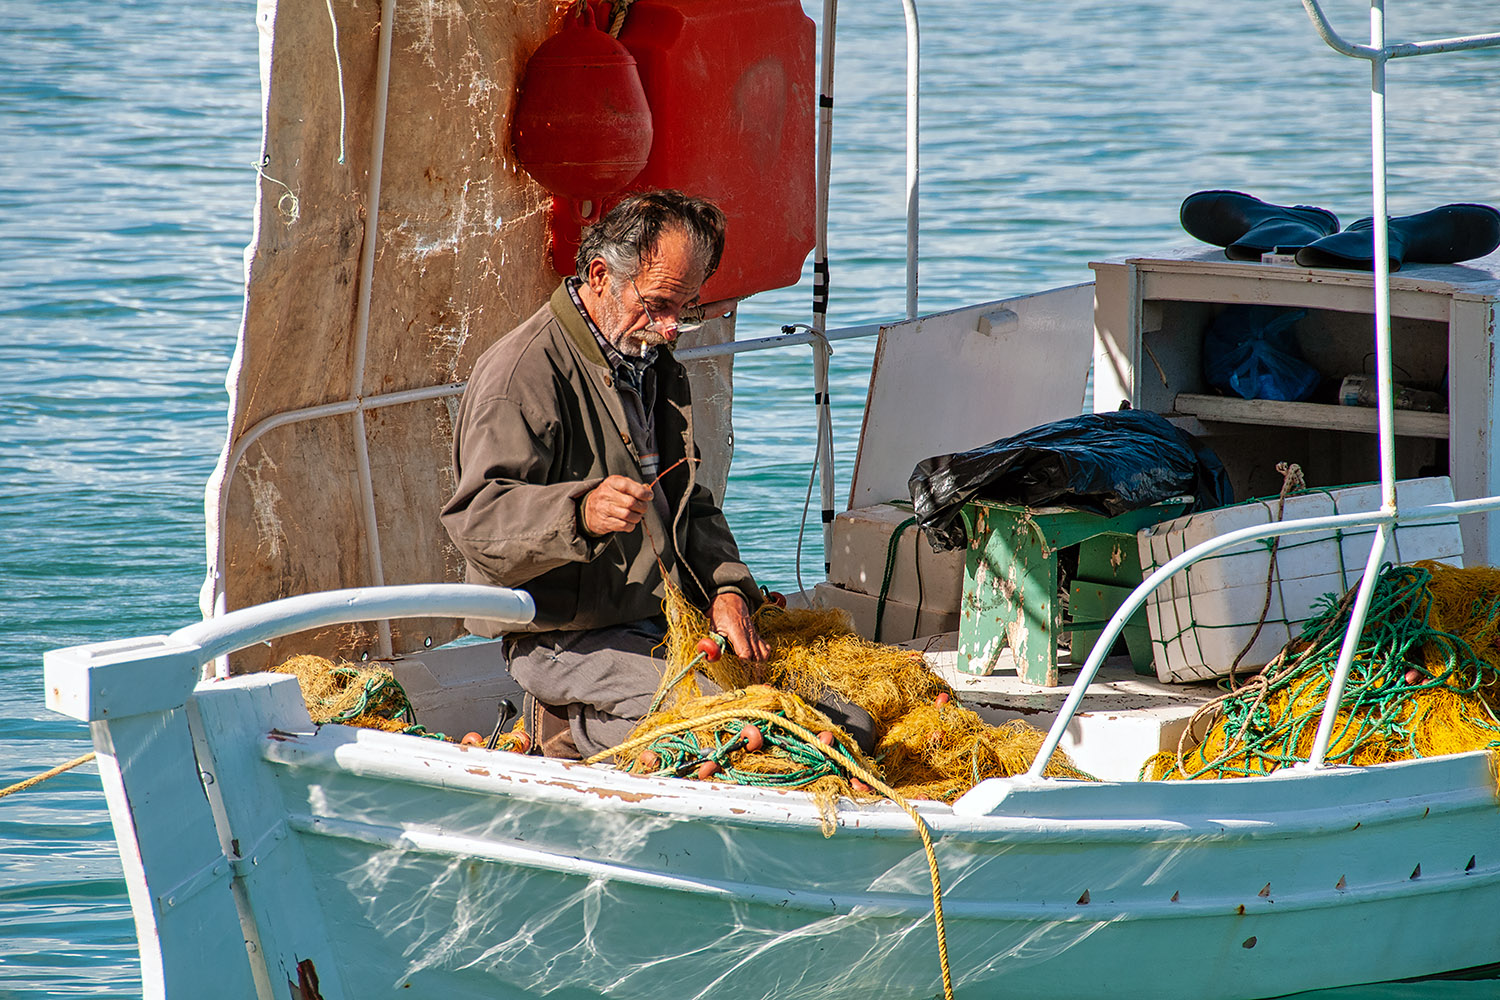 Fisherman mending his nets